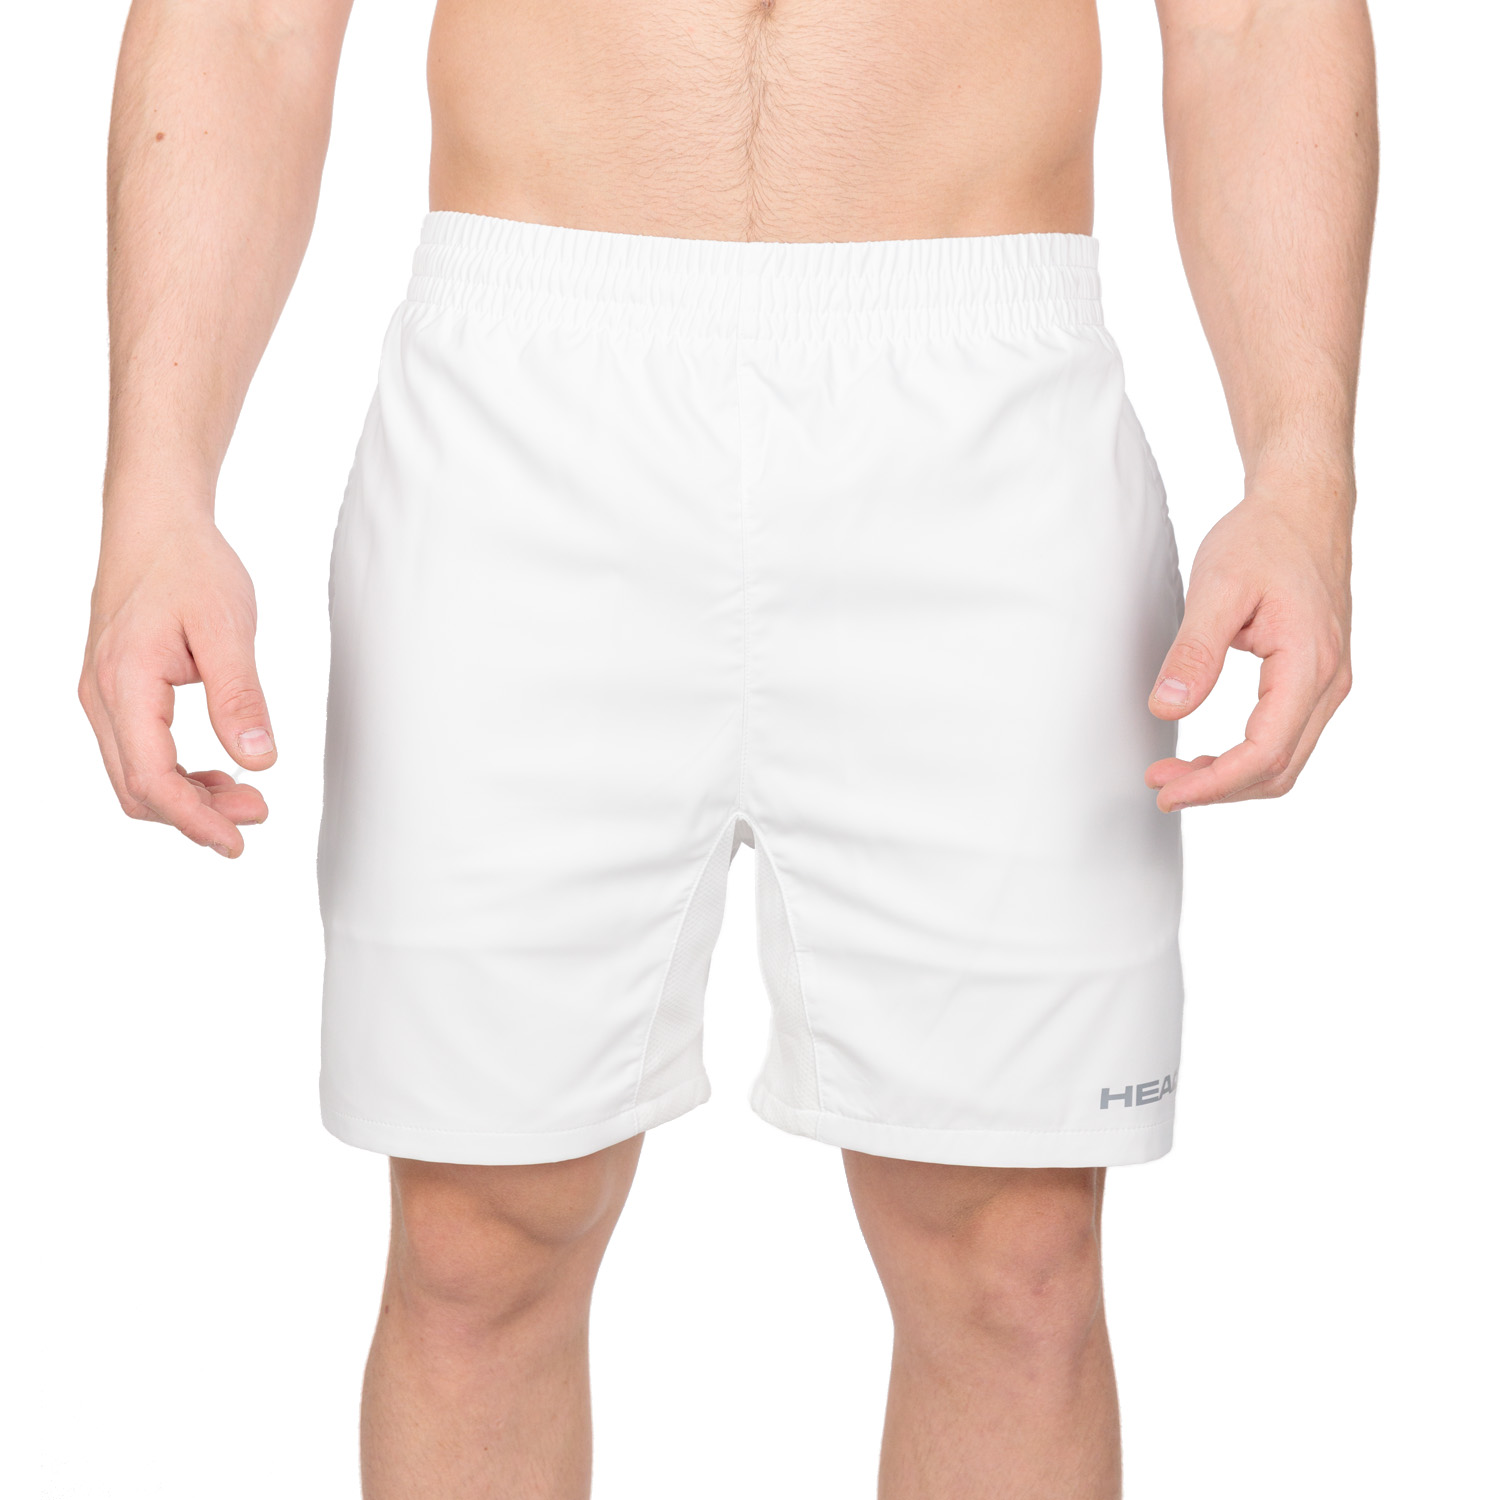 Head Club 8in Shorts - White